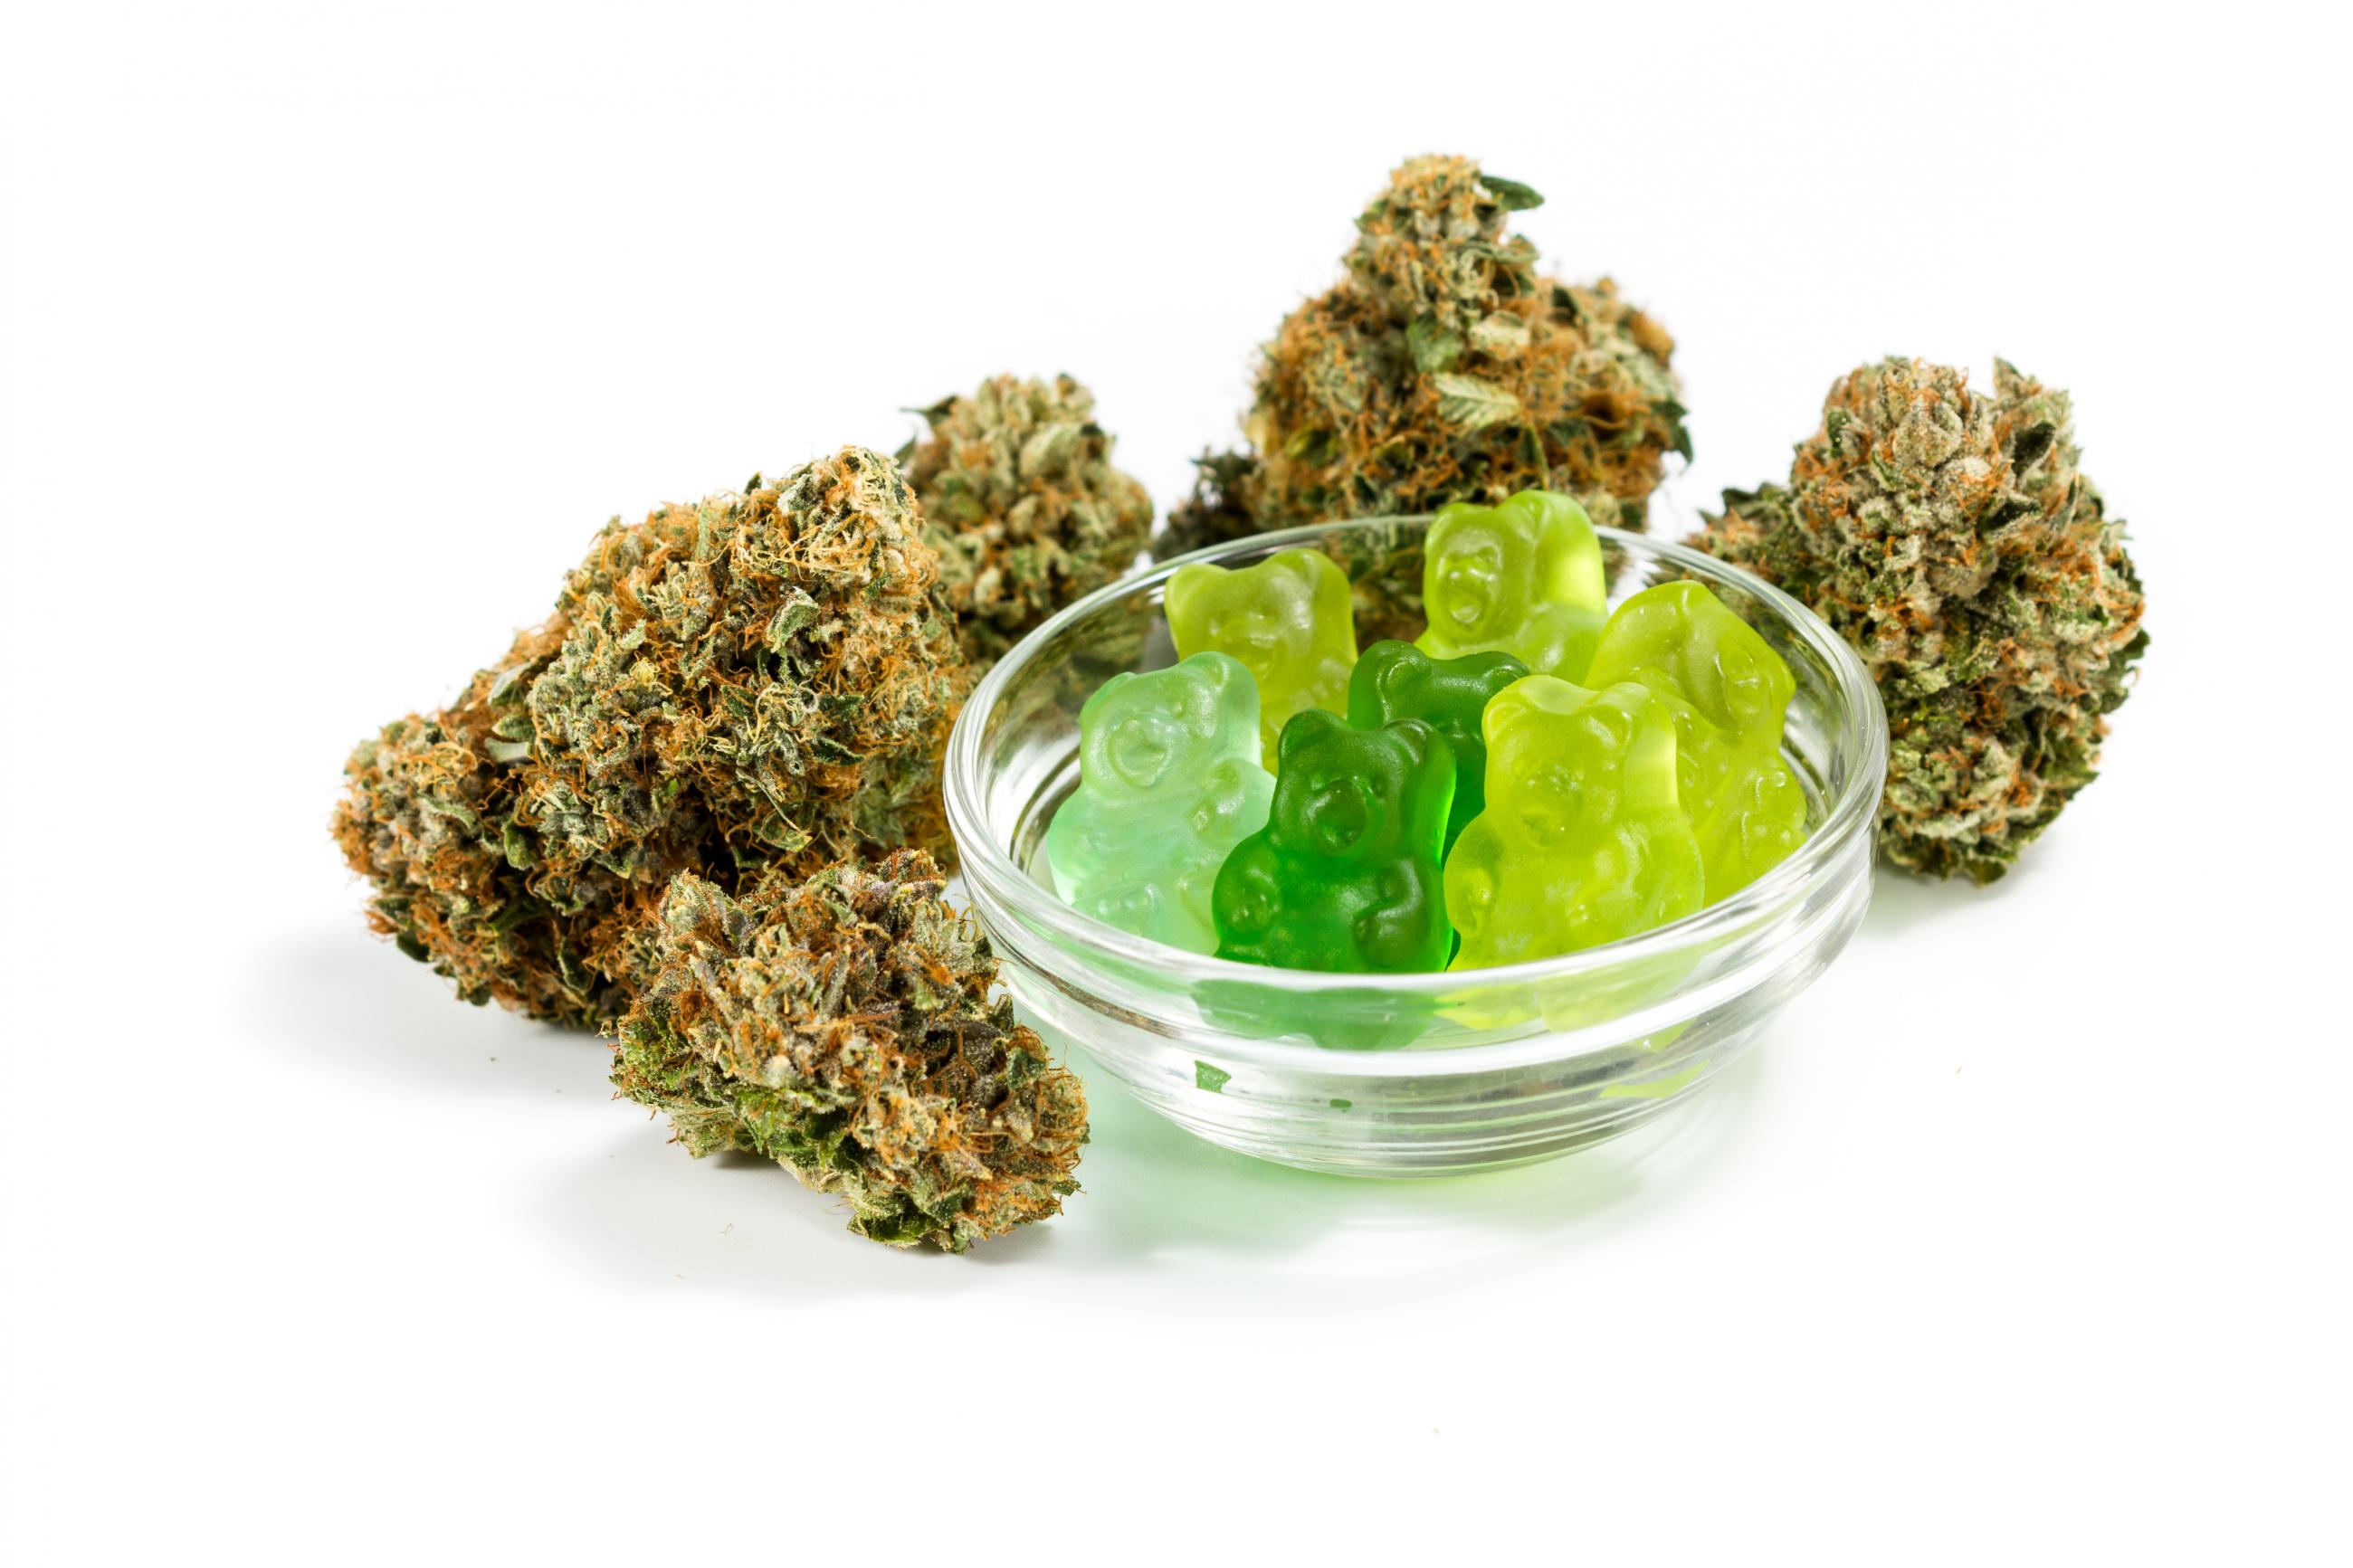 Consuming Edibles Vs. Smoking Medical Marijuana